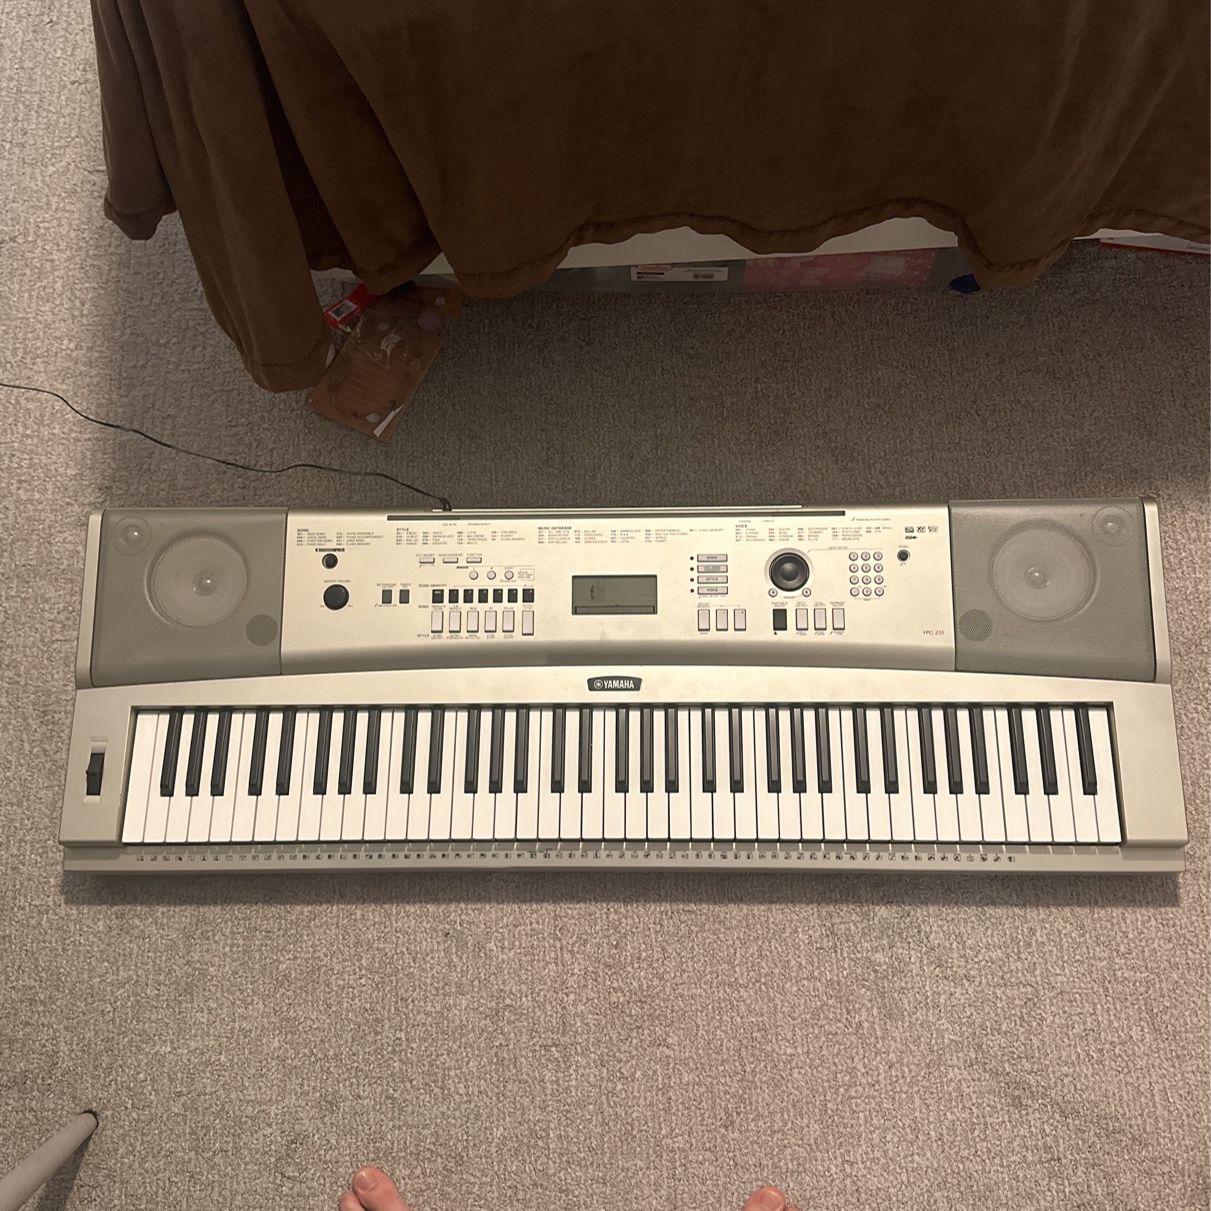 Ypg - 235 Yamaha Keyboard With Stand